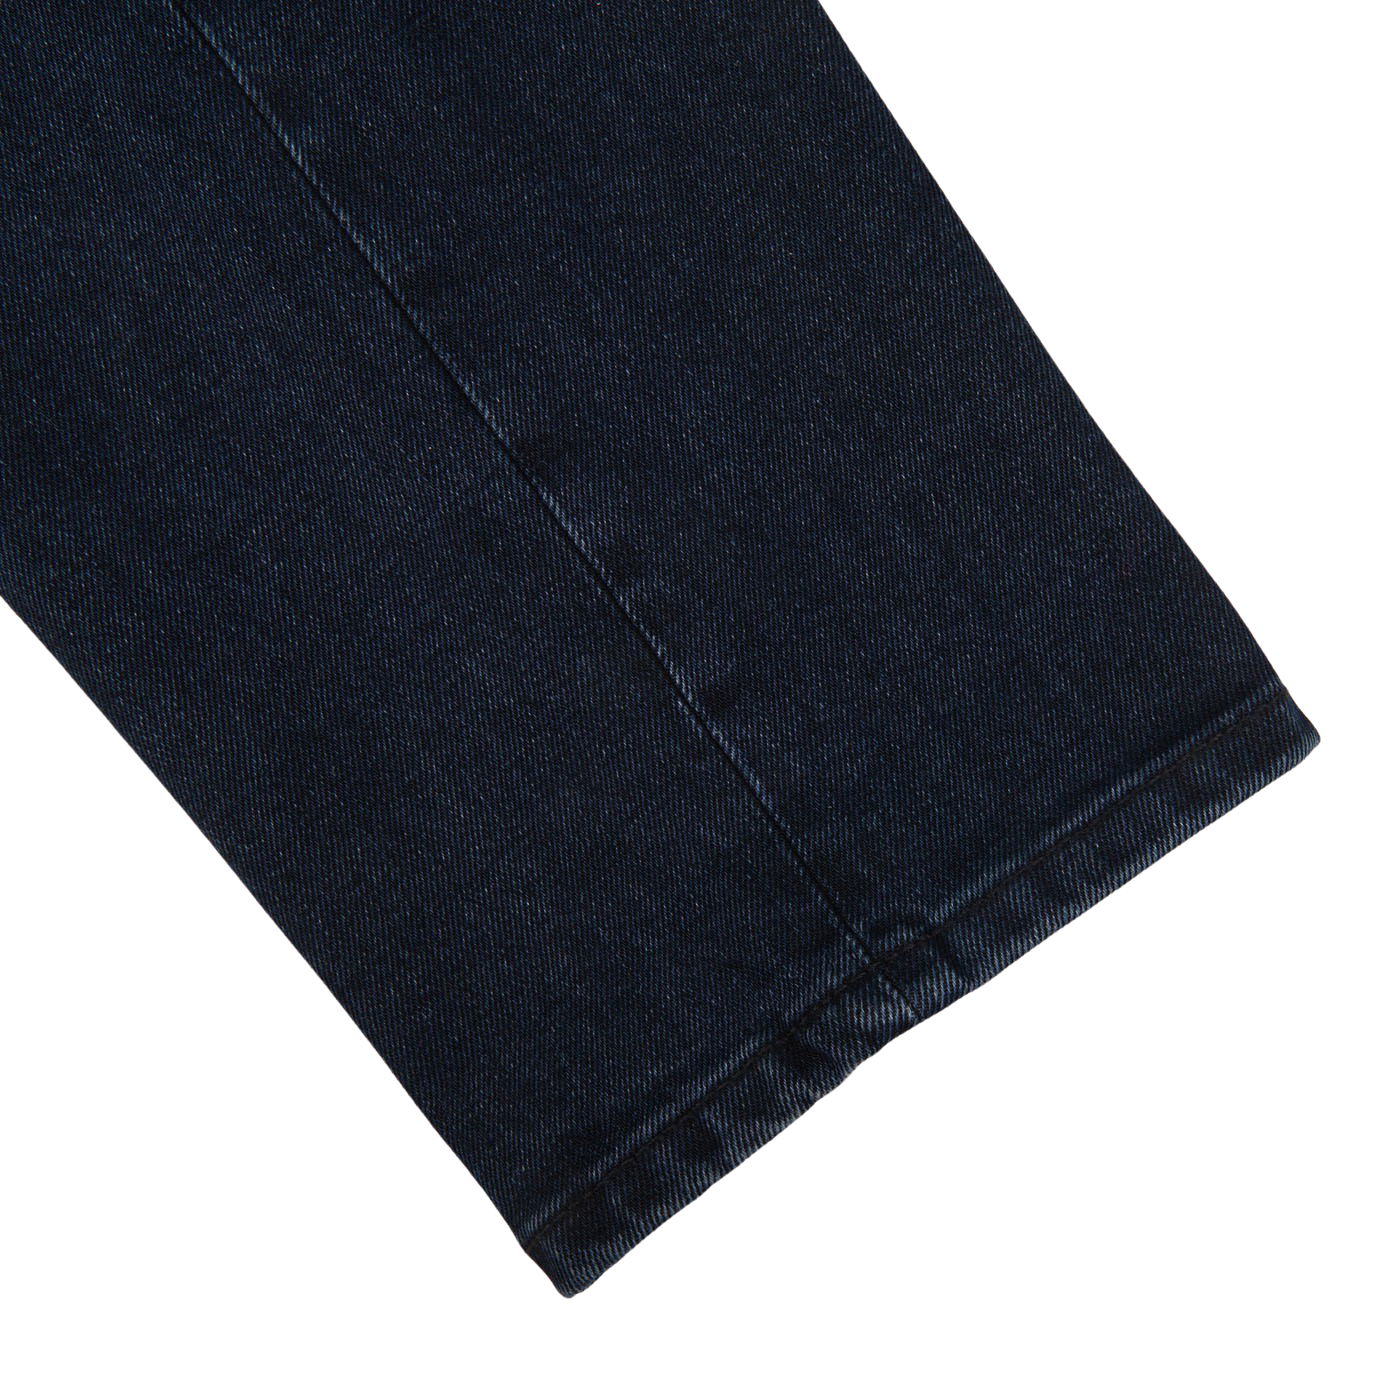 Jeanerica Blue Black Cotton TM005 Jeans Cuff